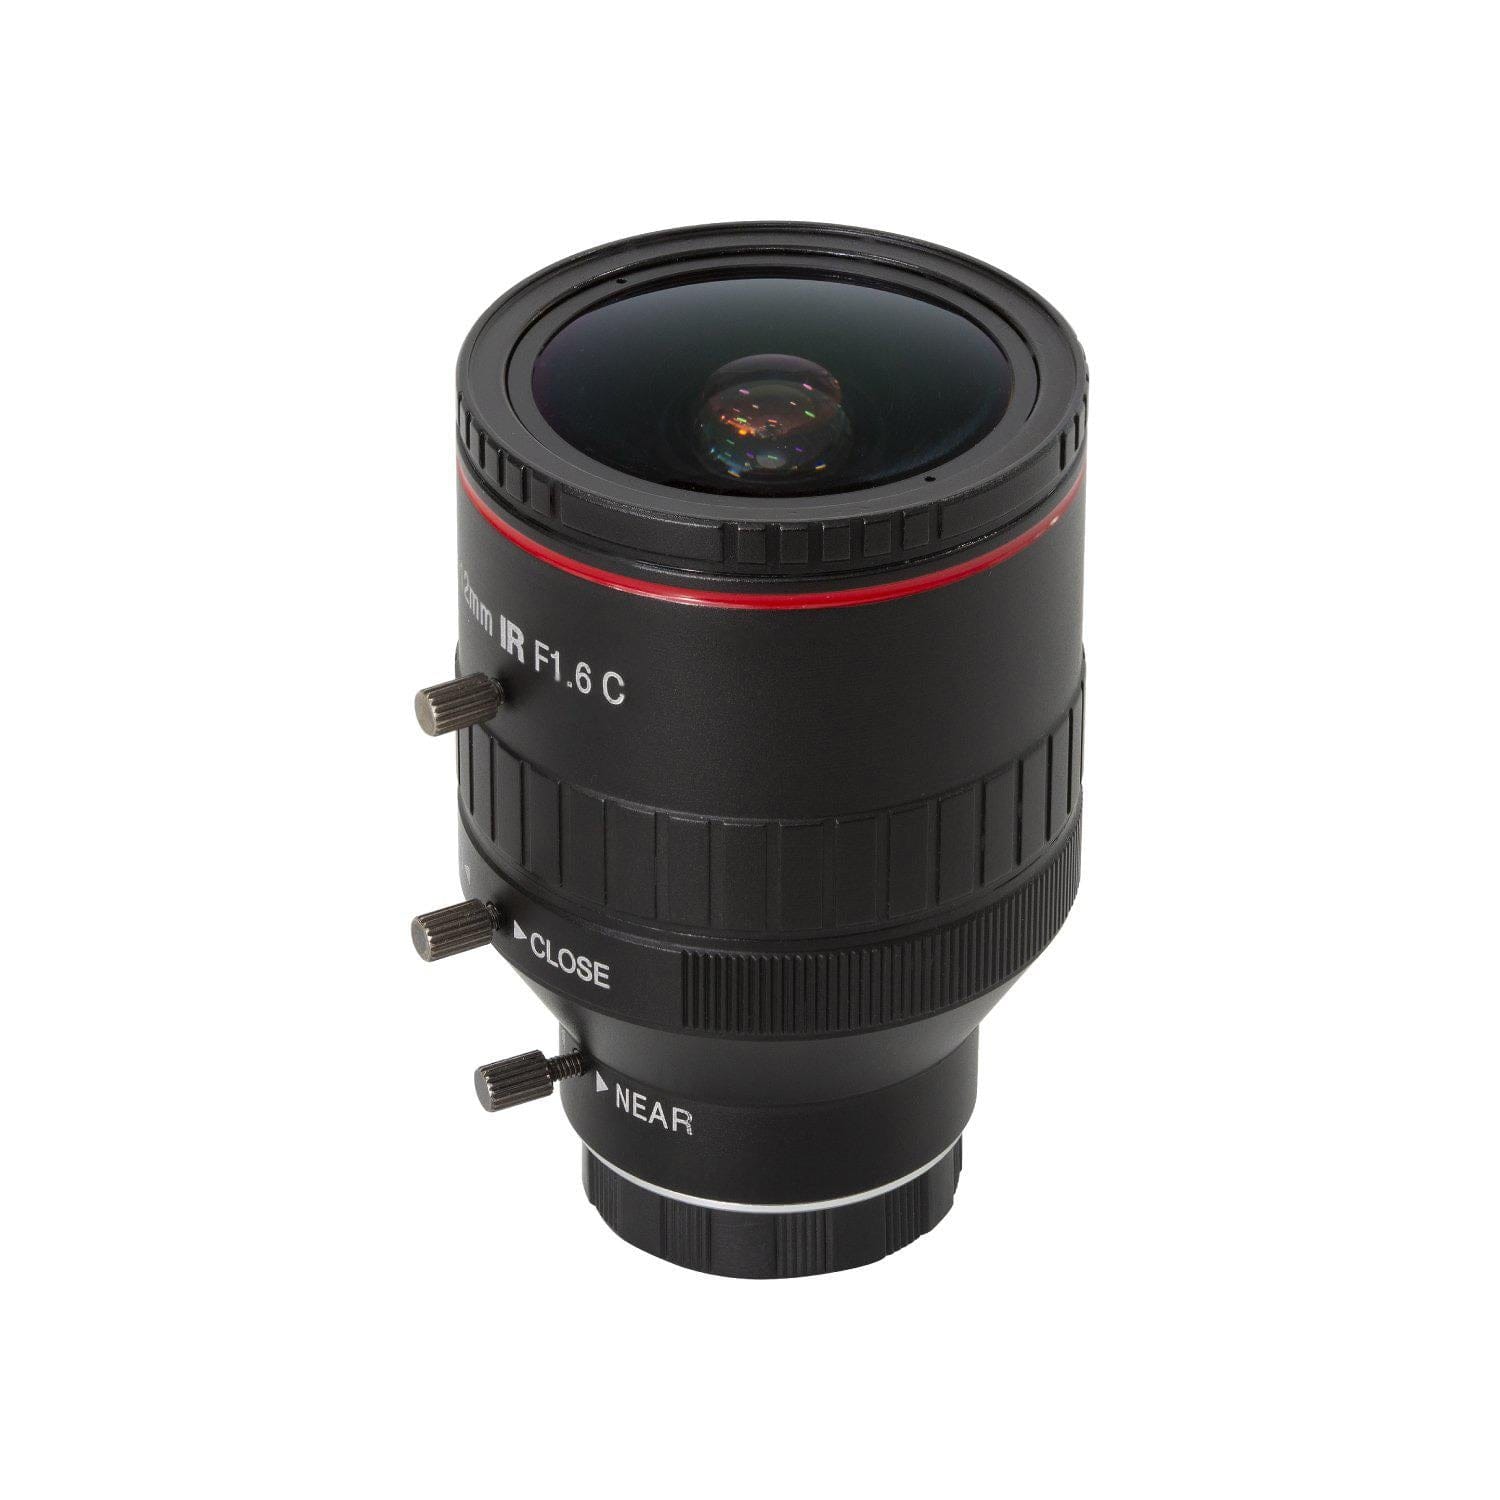 C-Mount Lens for Raspberry Pi HQ Camera - 2.8-12mm Varifocal - The Pi Hut